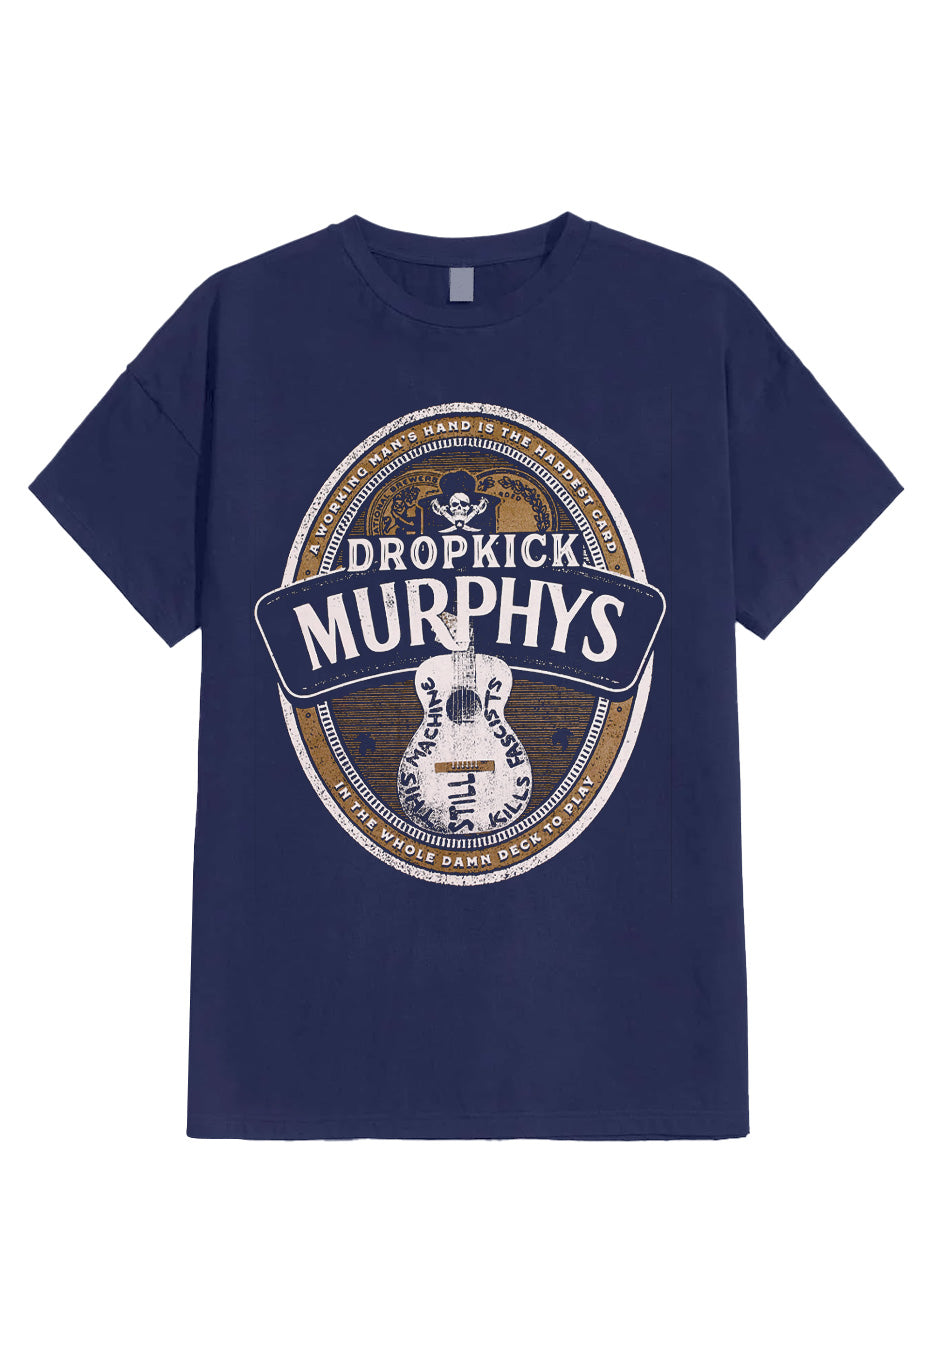 Dropkick Murphys - Beer Label Blue - T-Shirt